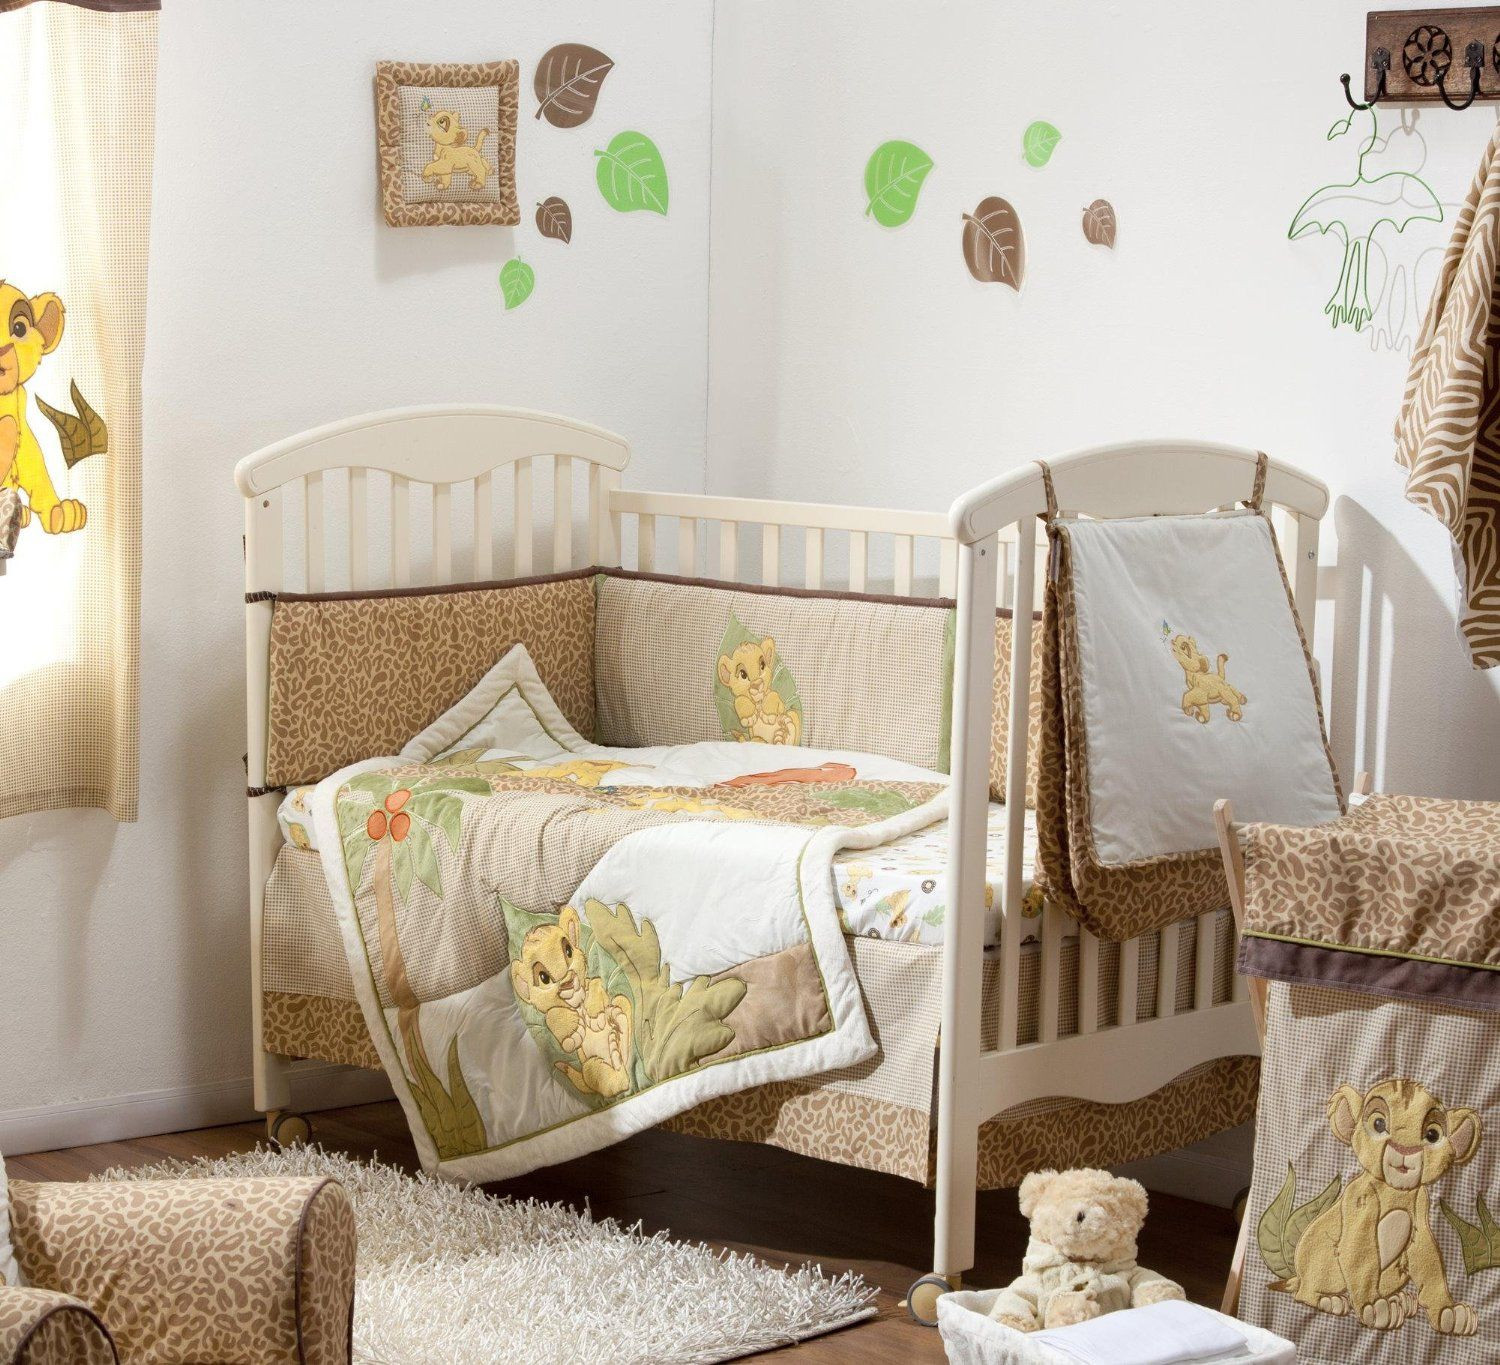 Lion King Baby Room Decor
 Lion King Crib Bedding Set